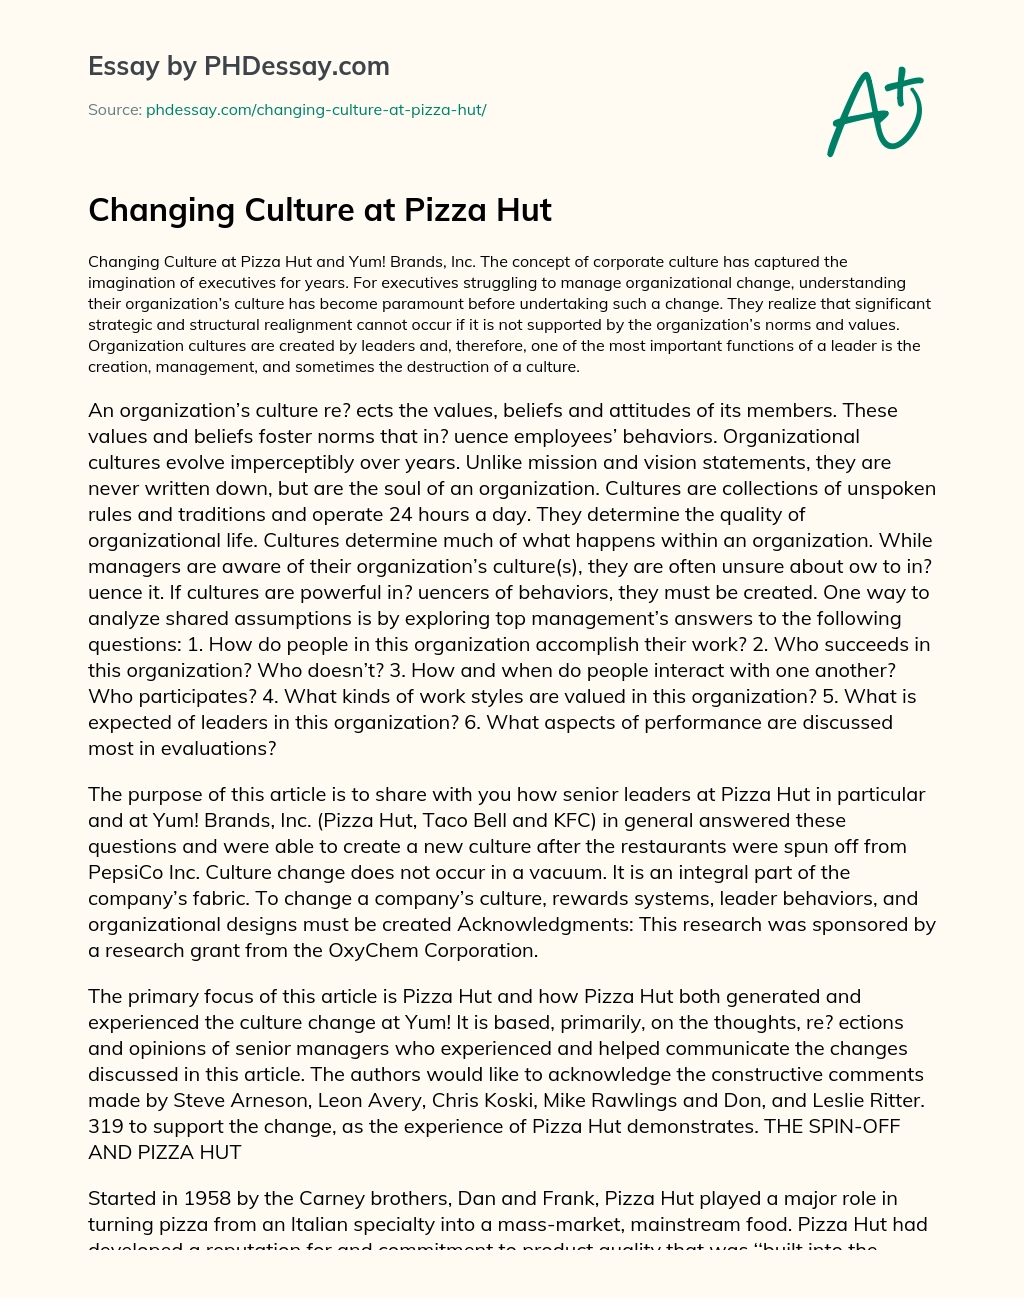 Changing Culture at Pizza Hut essay